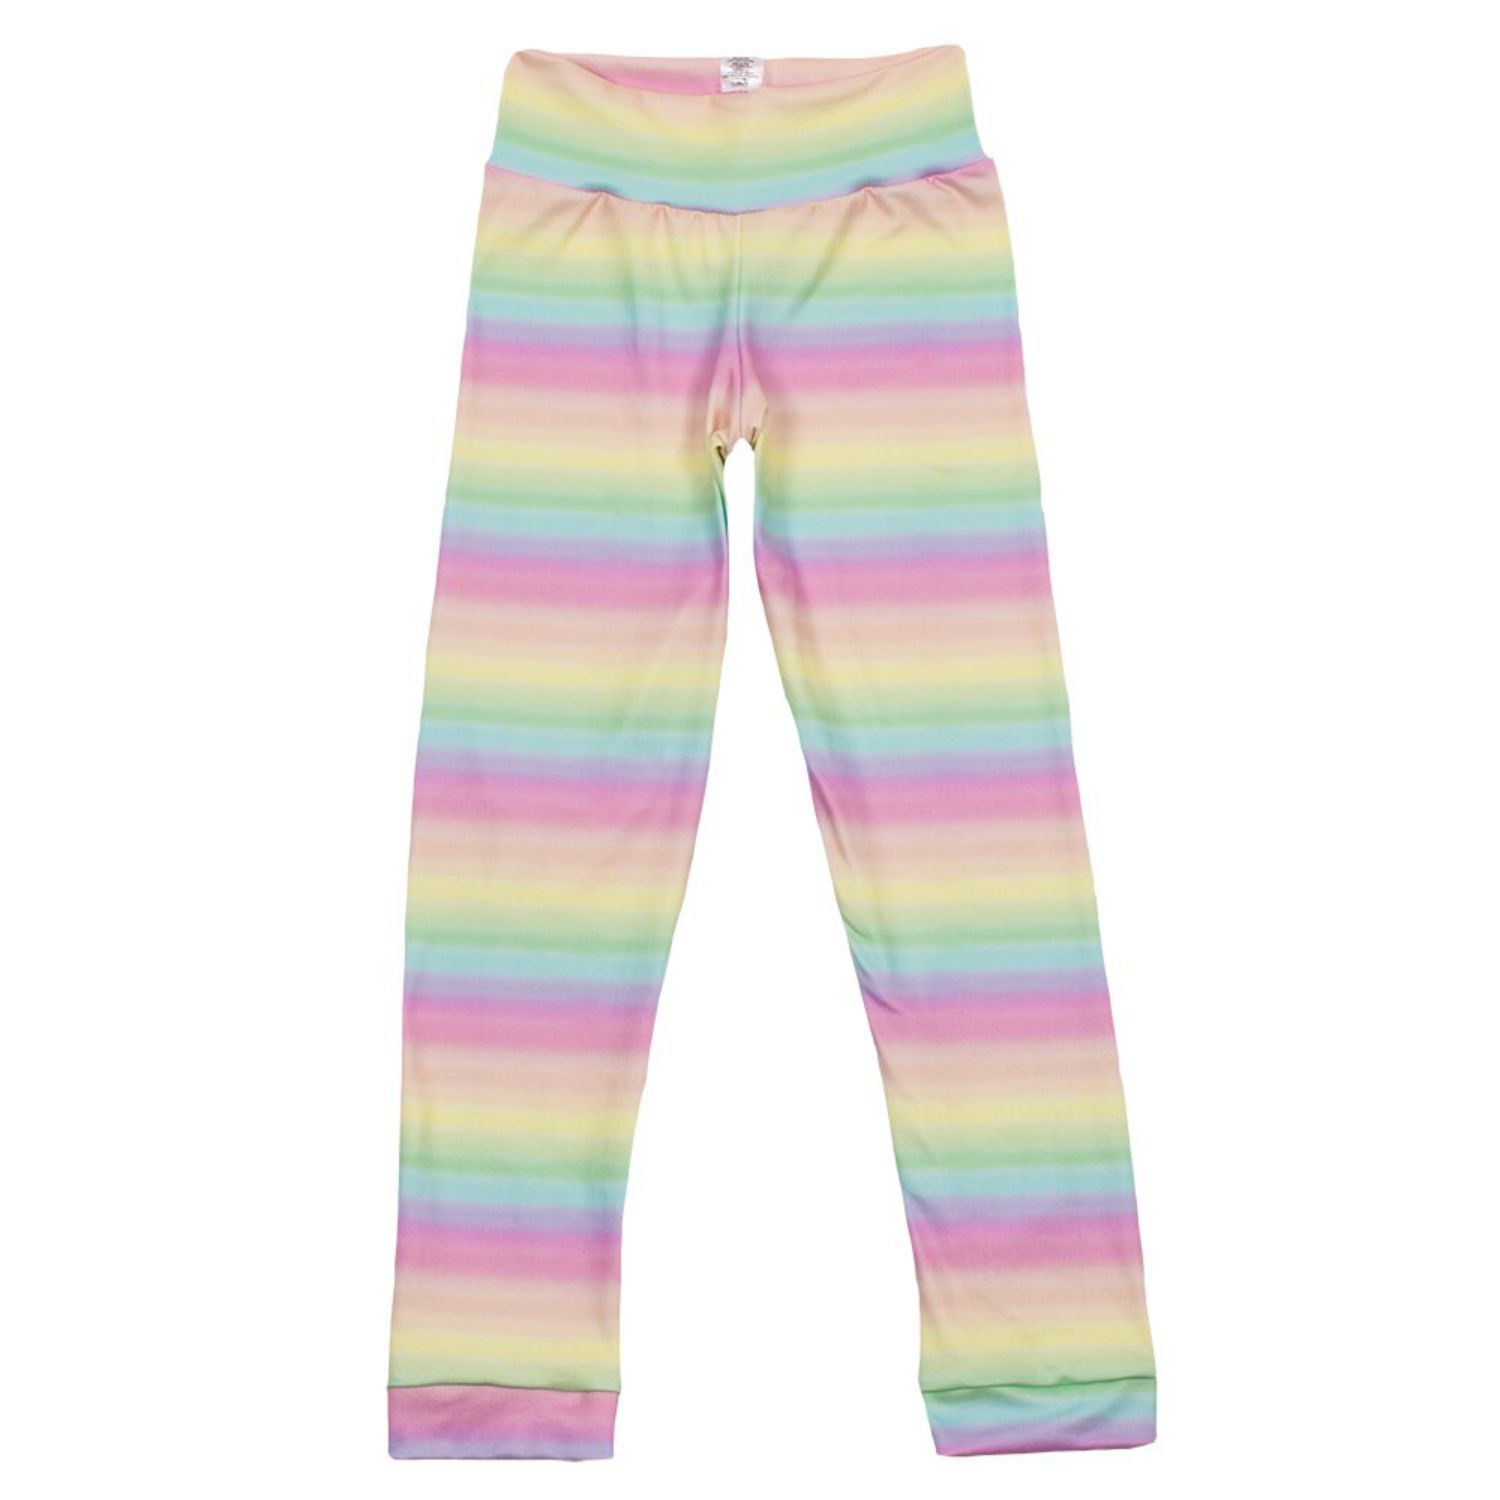 Bumblito Leggings (Size: S / Pattern: Rainbow Sherbet) Pattern: Rainbow Sherbet / Size: S (50 - 68)